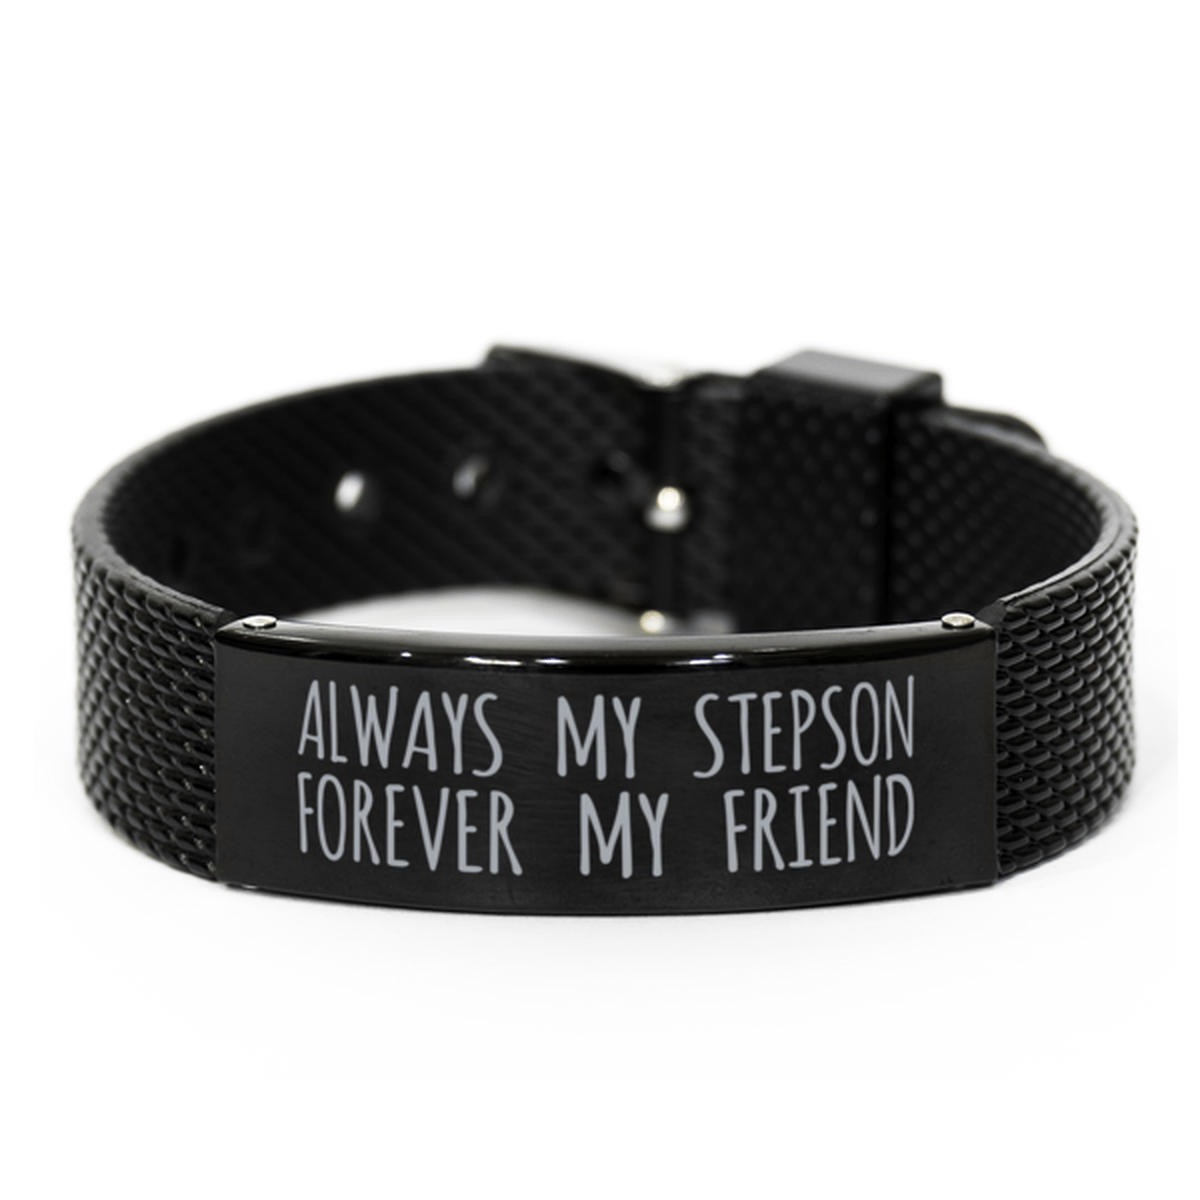 Inspirational Stepson Black Shark Mesh Bracelet, Always My Stepson Forever My Friend, Best Birthday Gifts for Family Friends